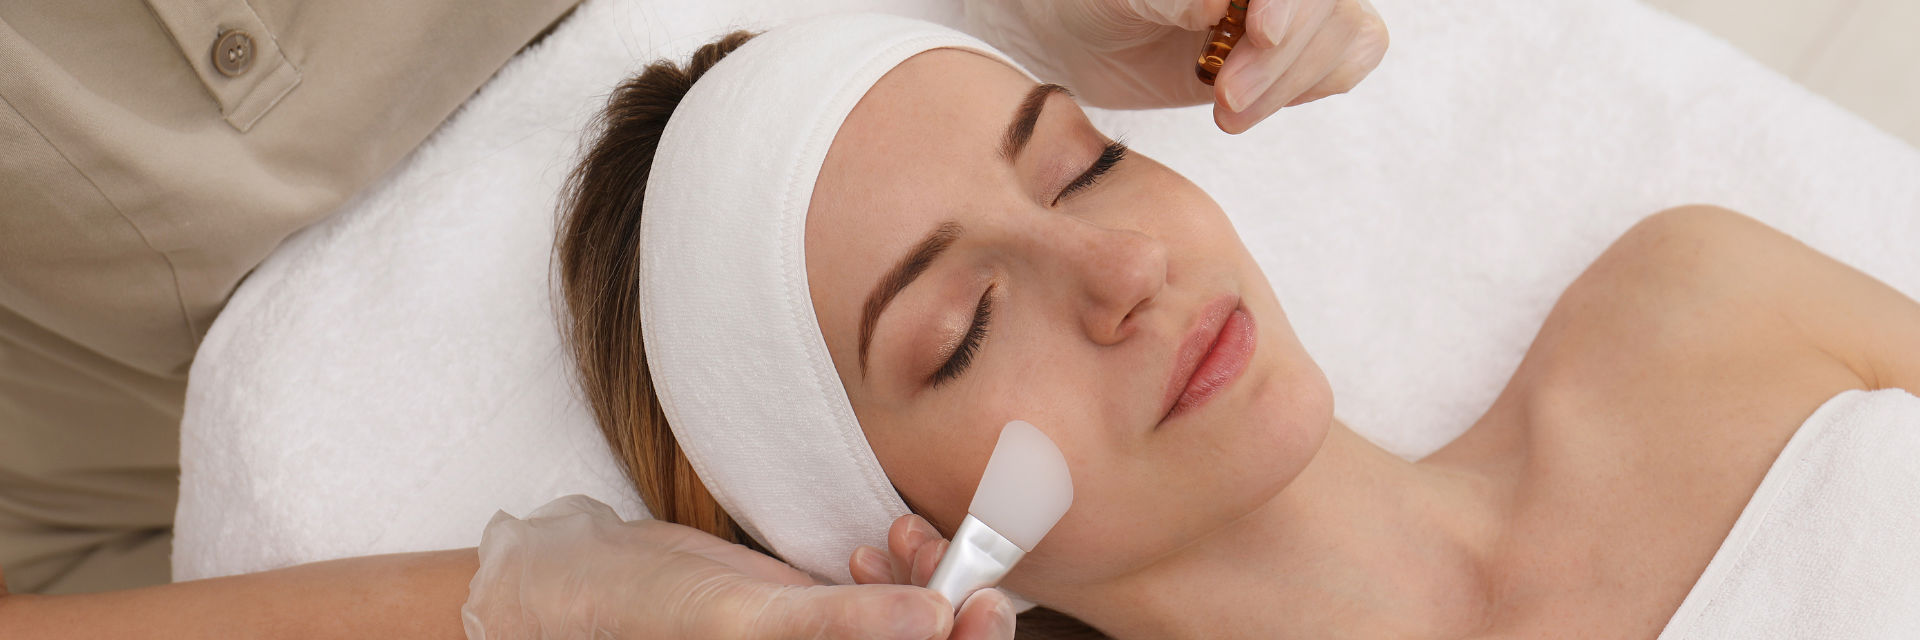 Woman undergoing spa facial treatment.